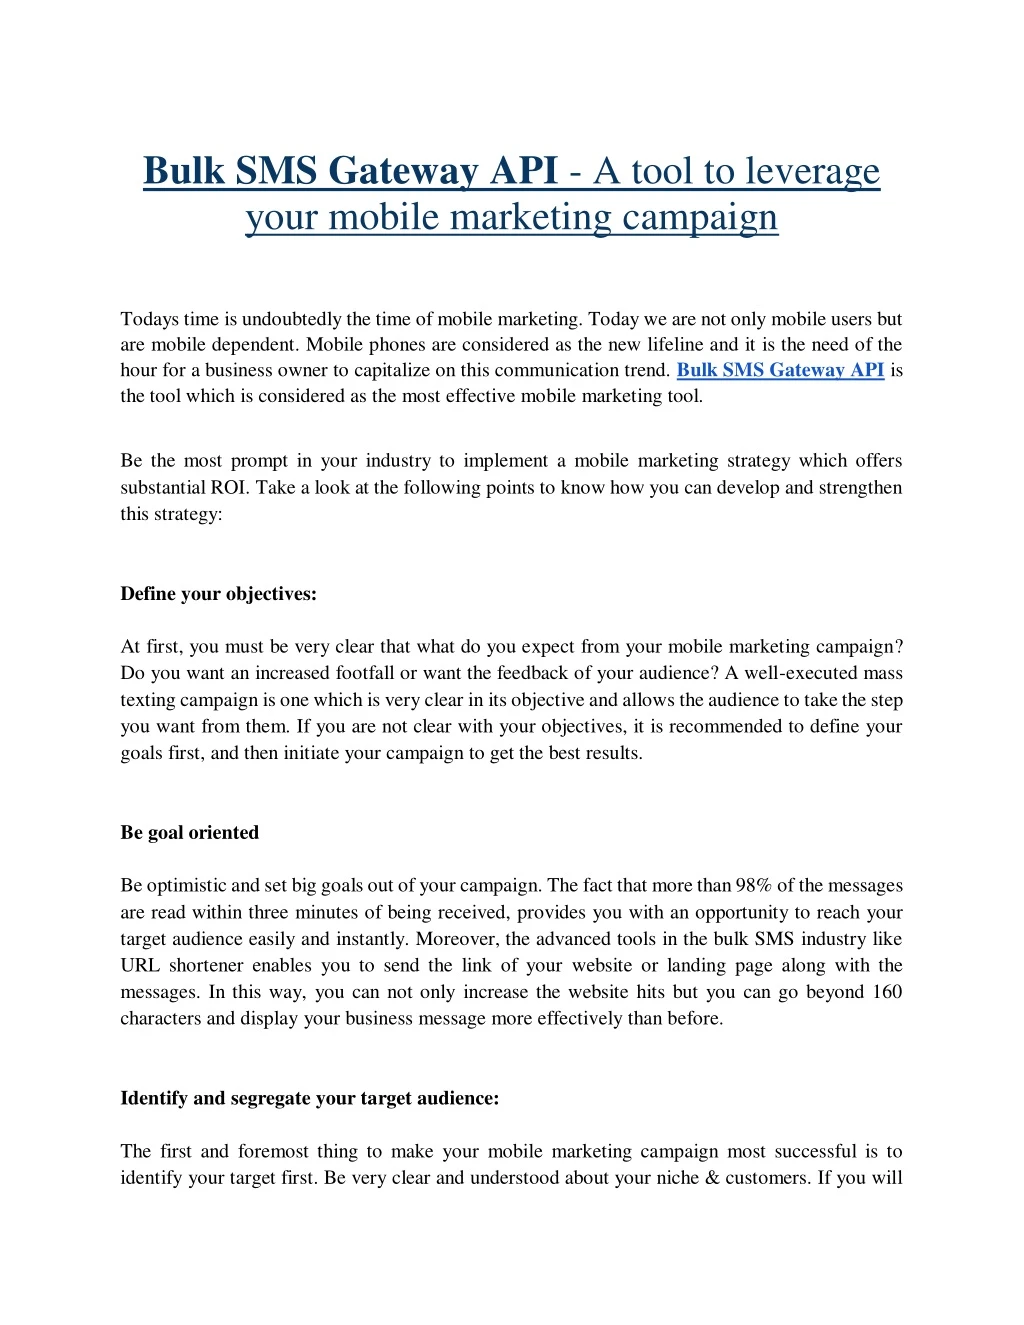 bulk sms gateway api a tool to leverage your